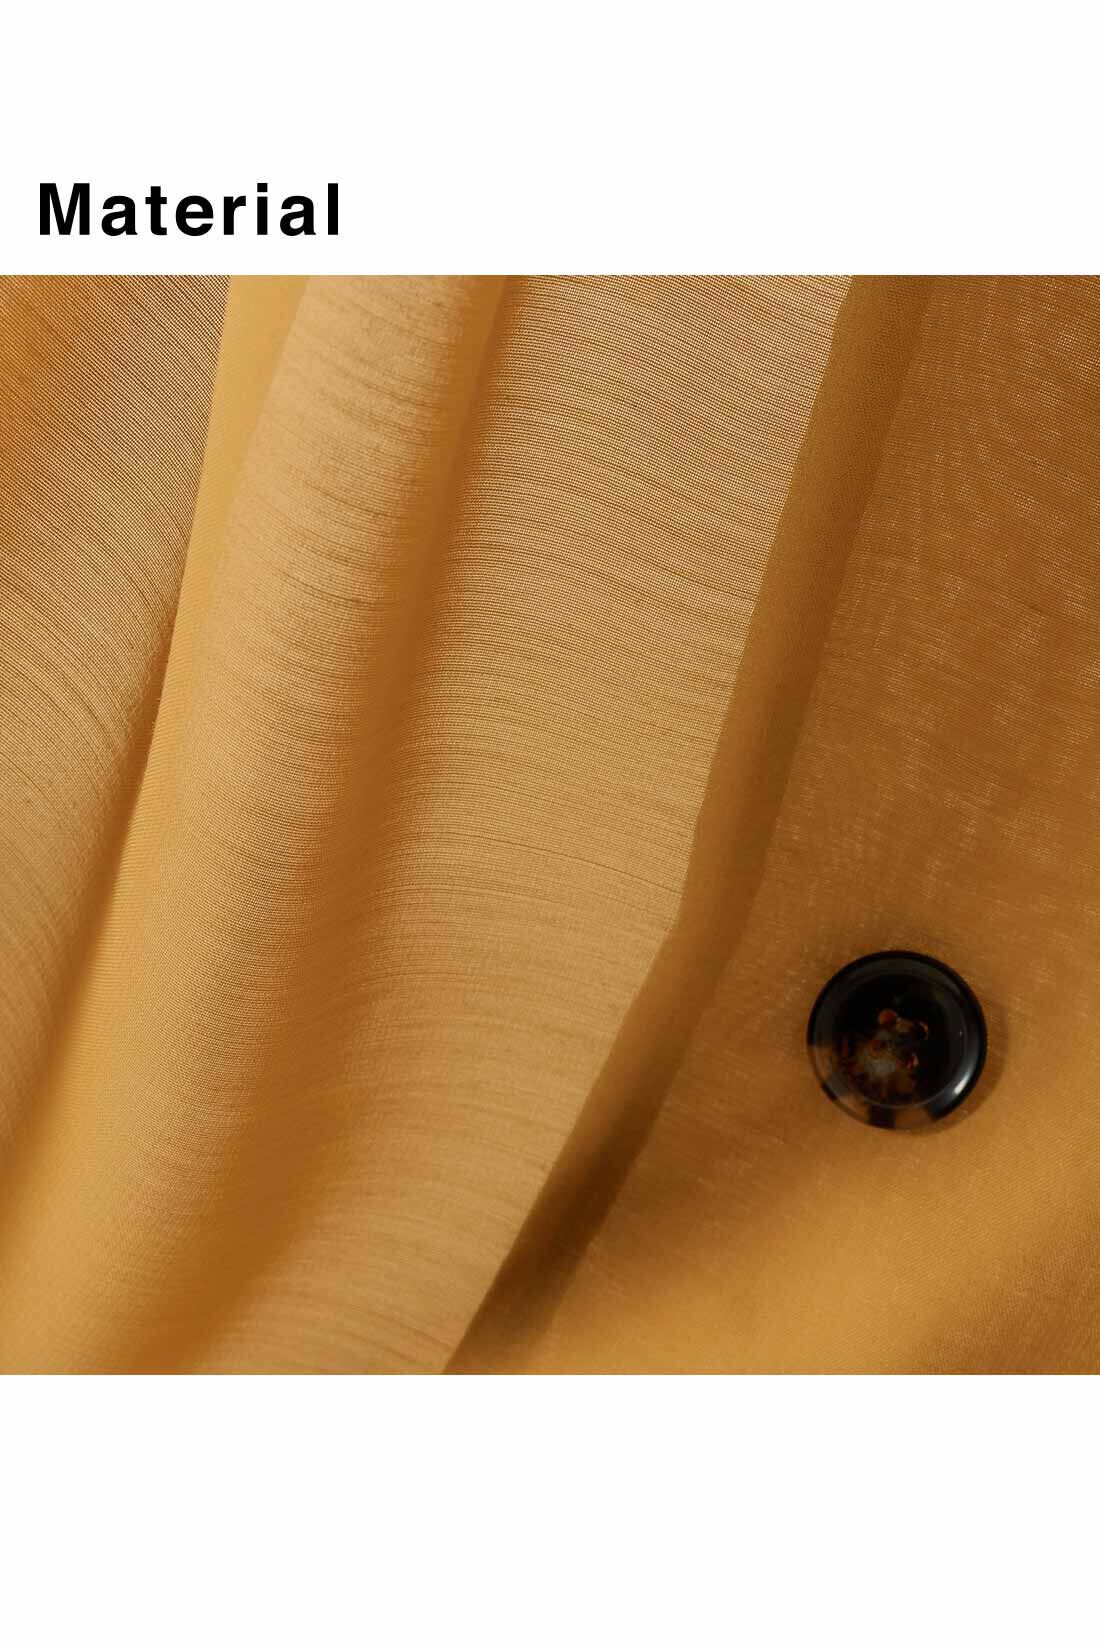 IEDIT|牧野紗弥さん×IEDIT[イディット]　ゆるシルエットのサマーシアージャケット〈キャメル〉|洗濯機洗いできるシアー素材。上品な透け感が涼しげで軽やか。